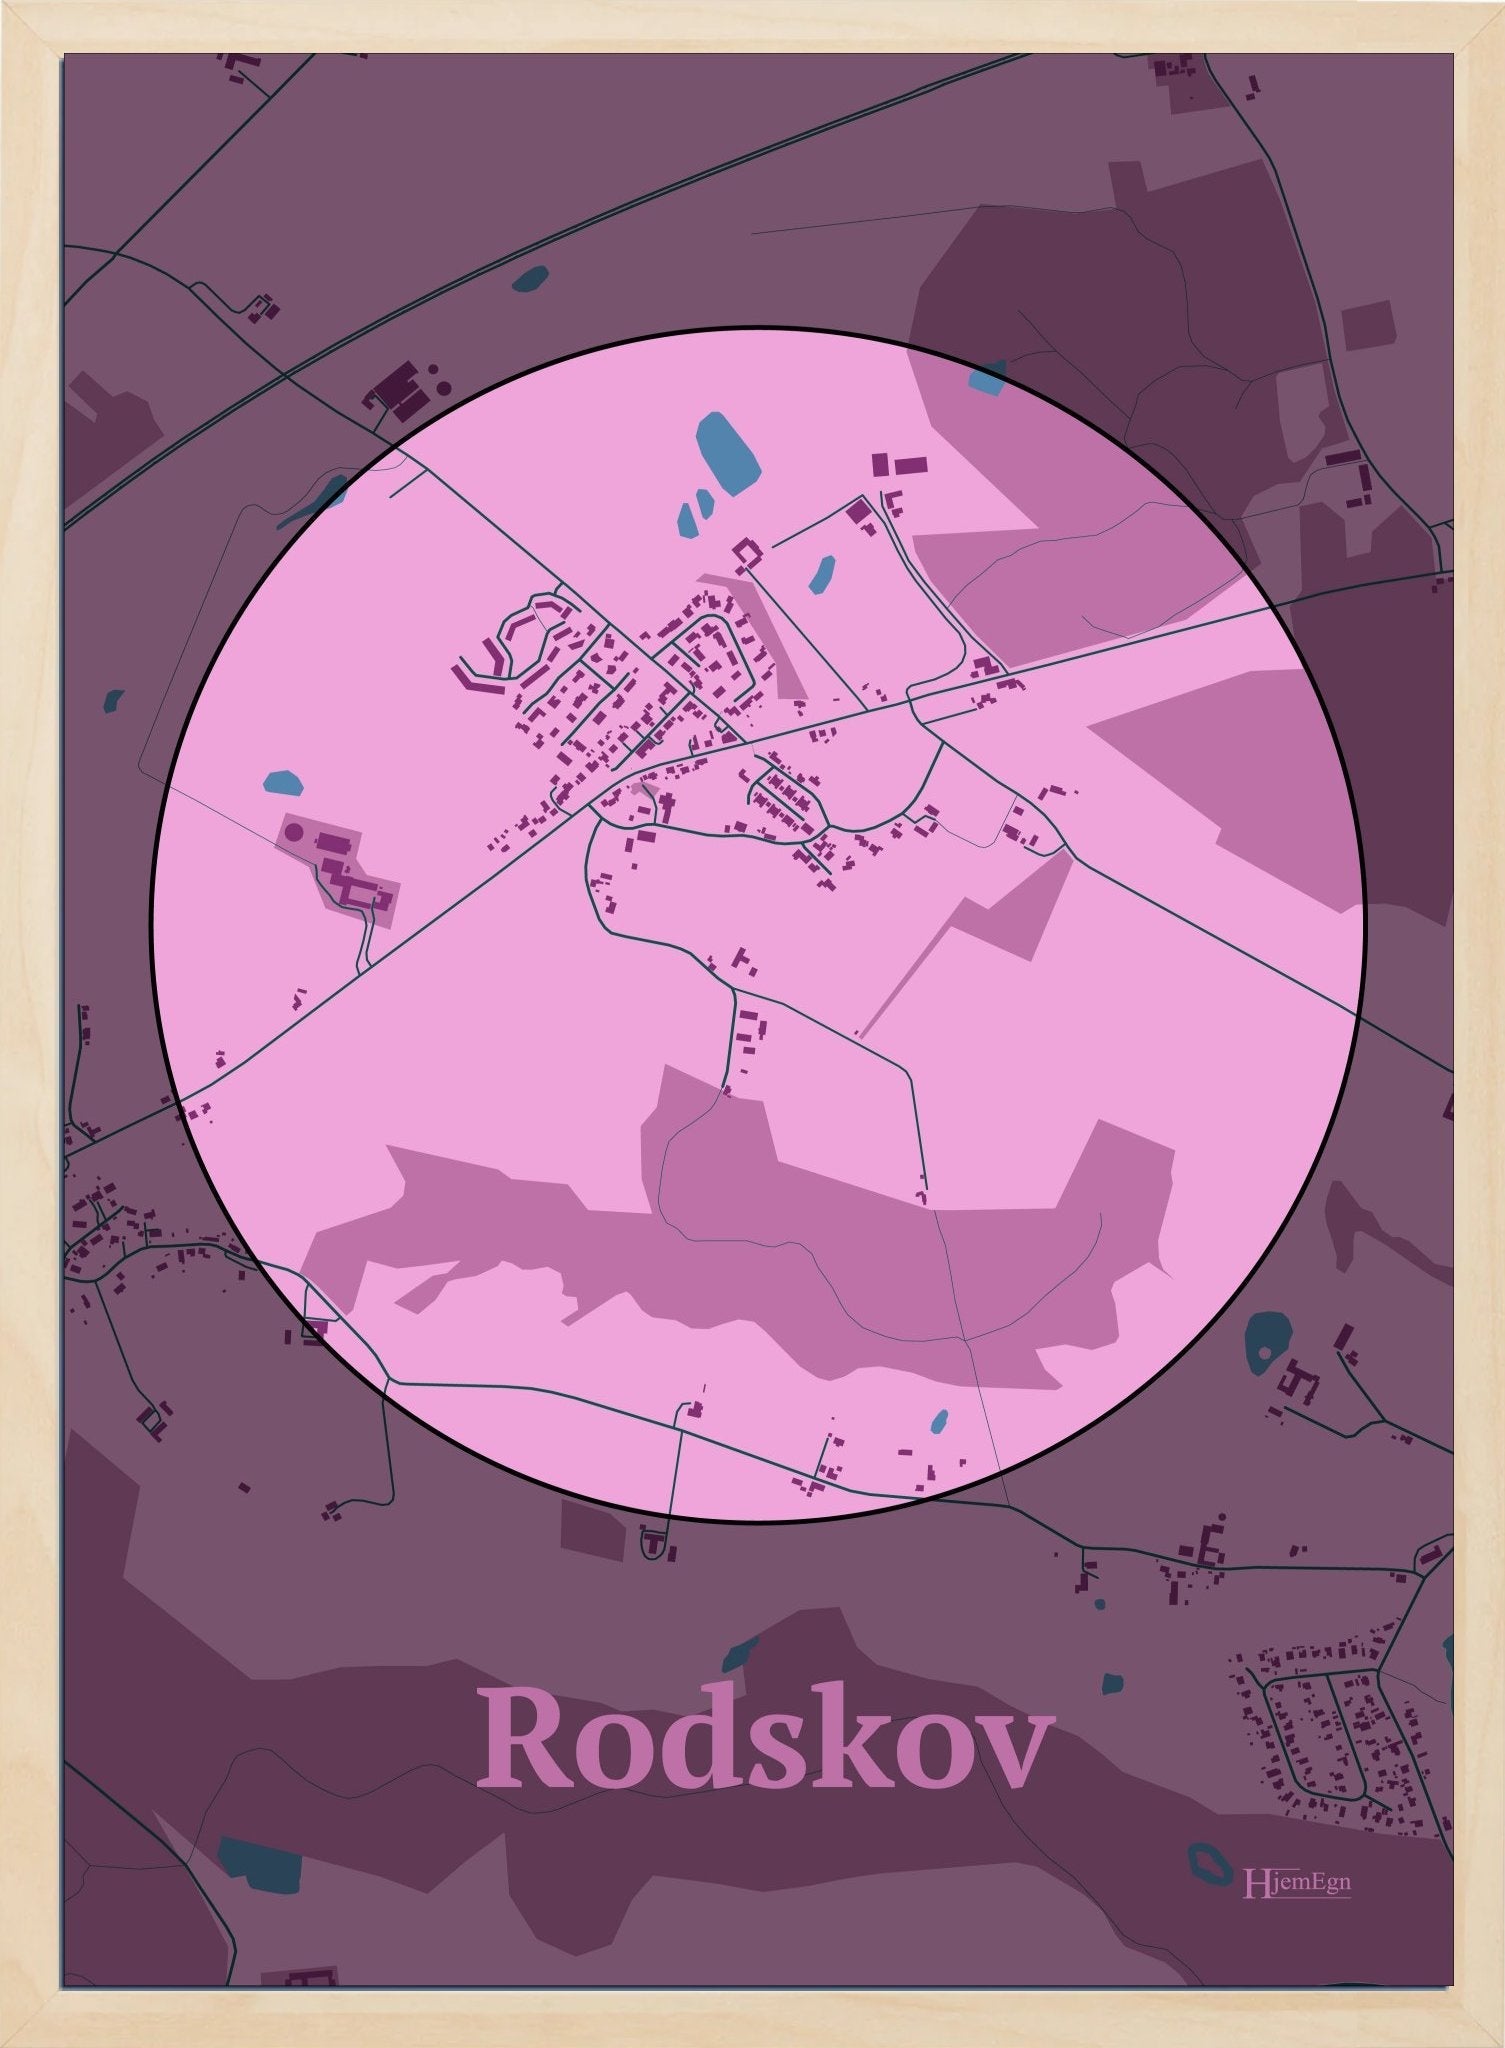 Rodskov plakat i farve pastel rød og HjemEgn.dk design centrum. Design bykort for Rodskov